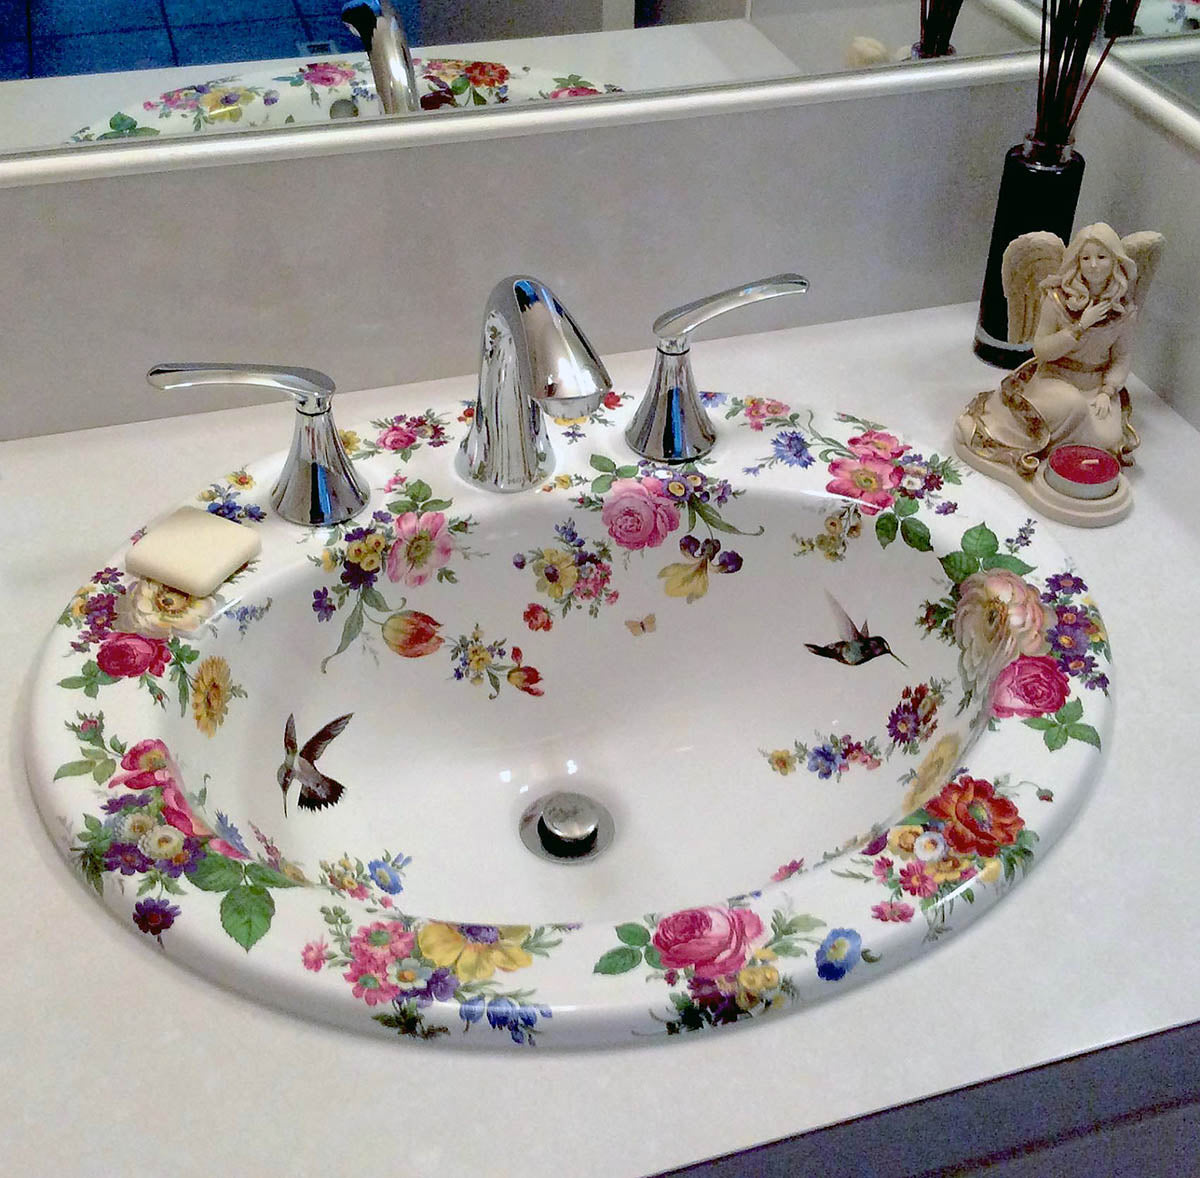 Powder room with painted bathroom sink of flowers, butterflies and hummingbirds